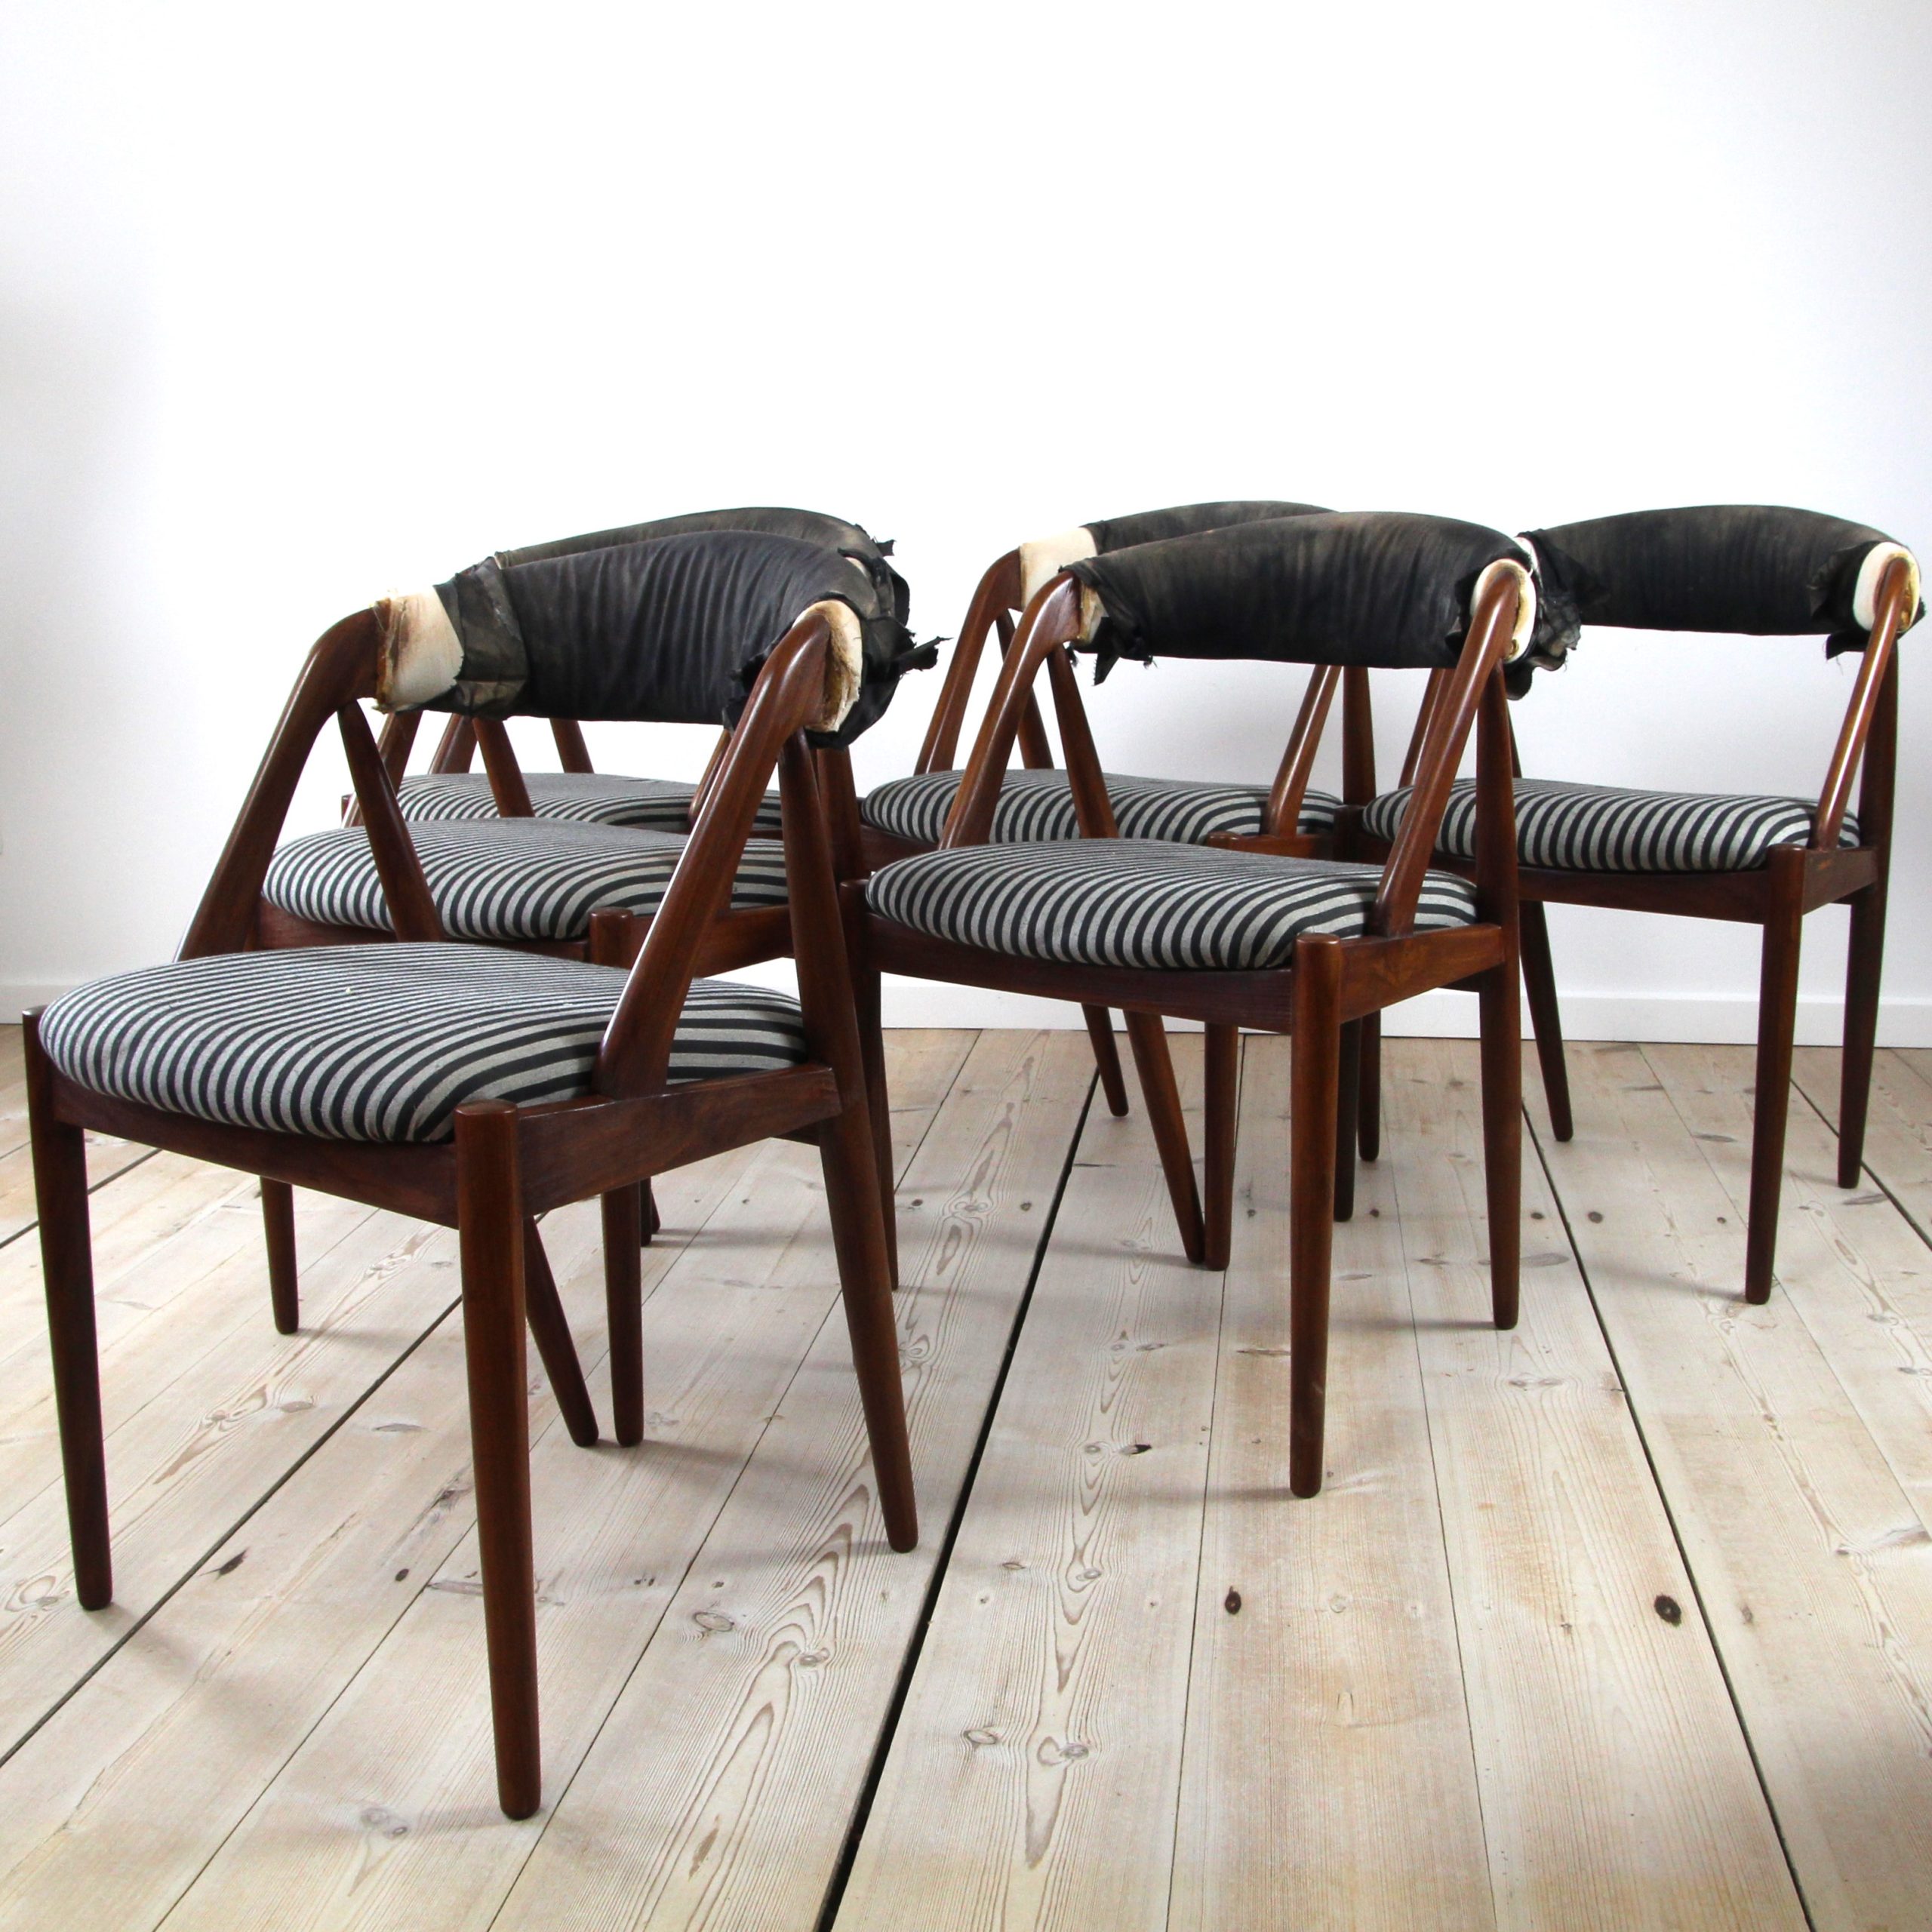 Teak chair model 31 by Kai Kristiansen – 6 available